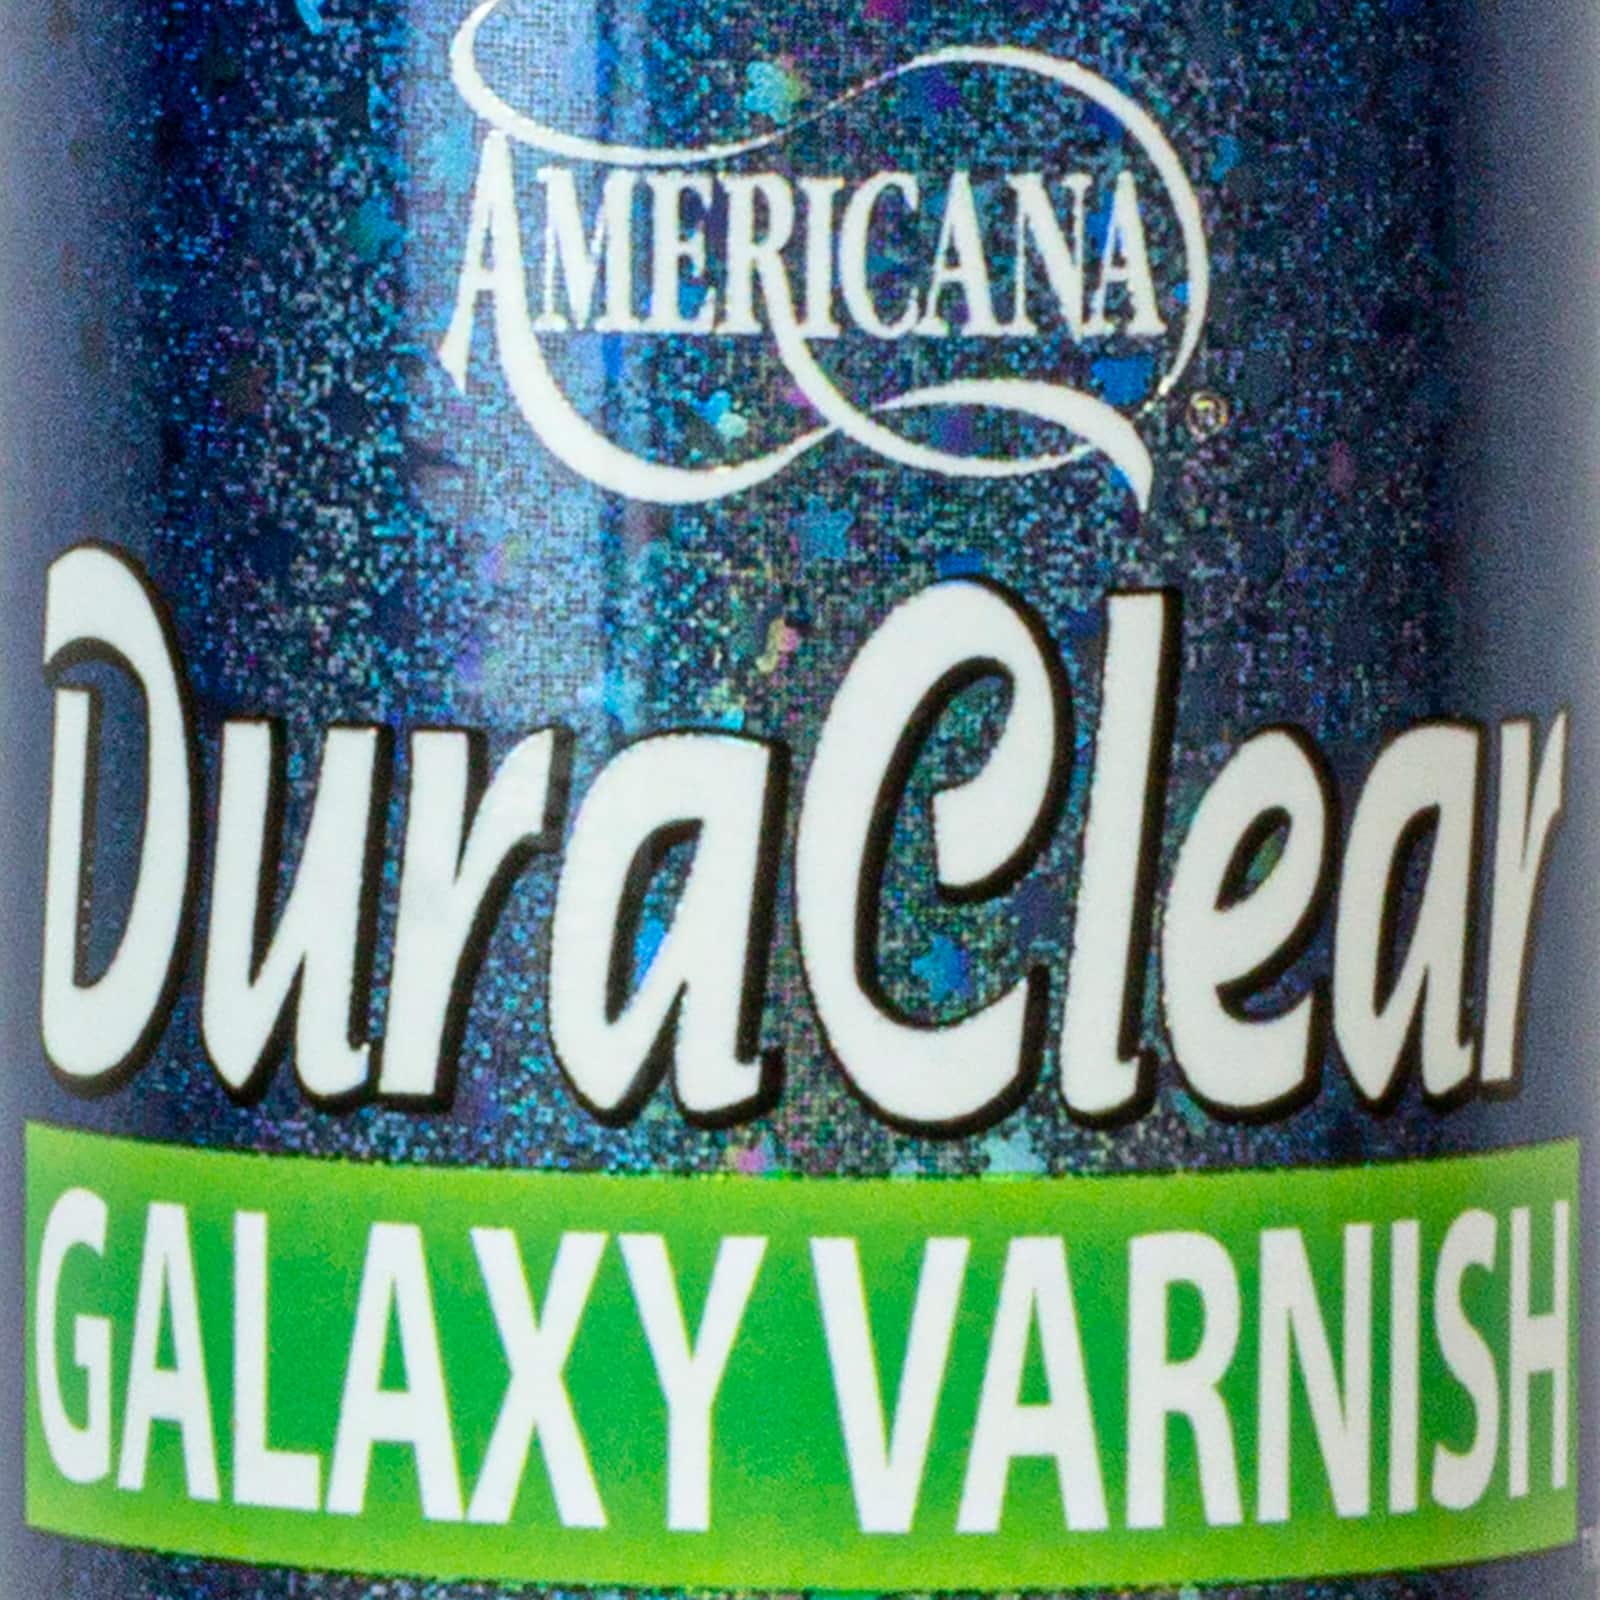 DecoArt Americana DuraClear Varnish 8oz Galaxy for sale online